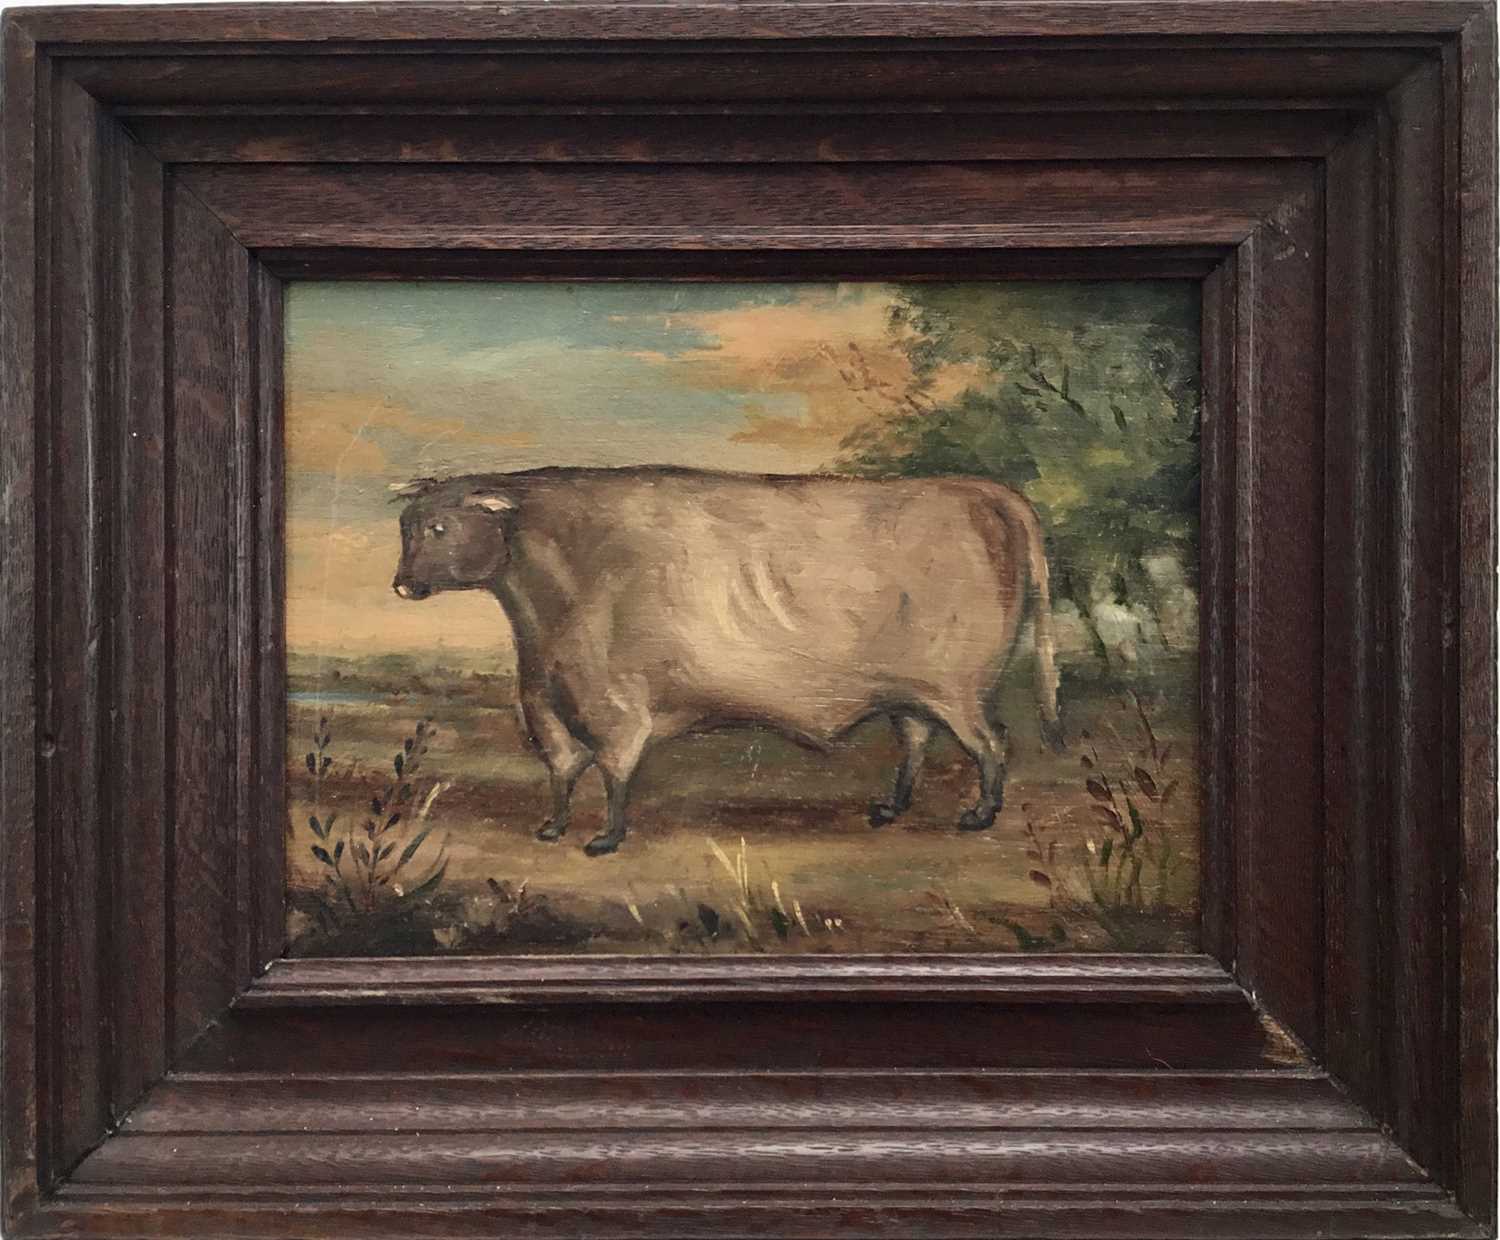 English school oil on panel - A Prize Bull, 21cm x 27cm, framed